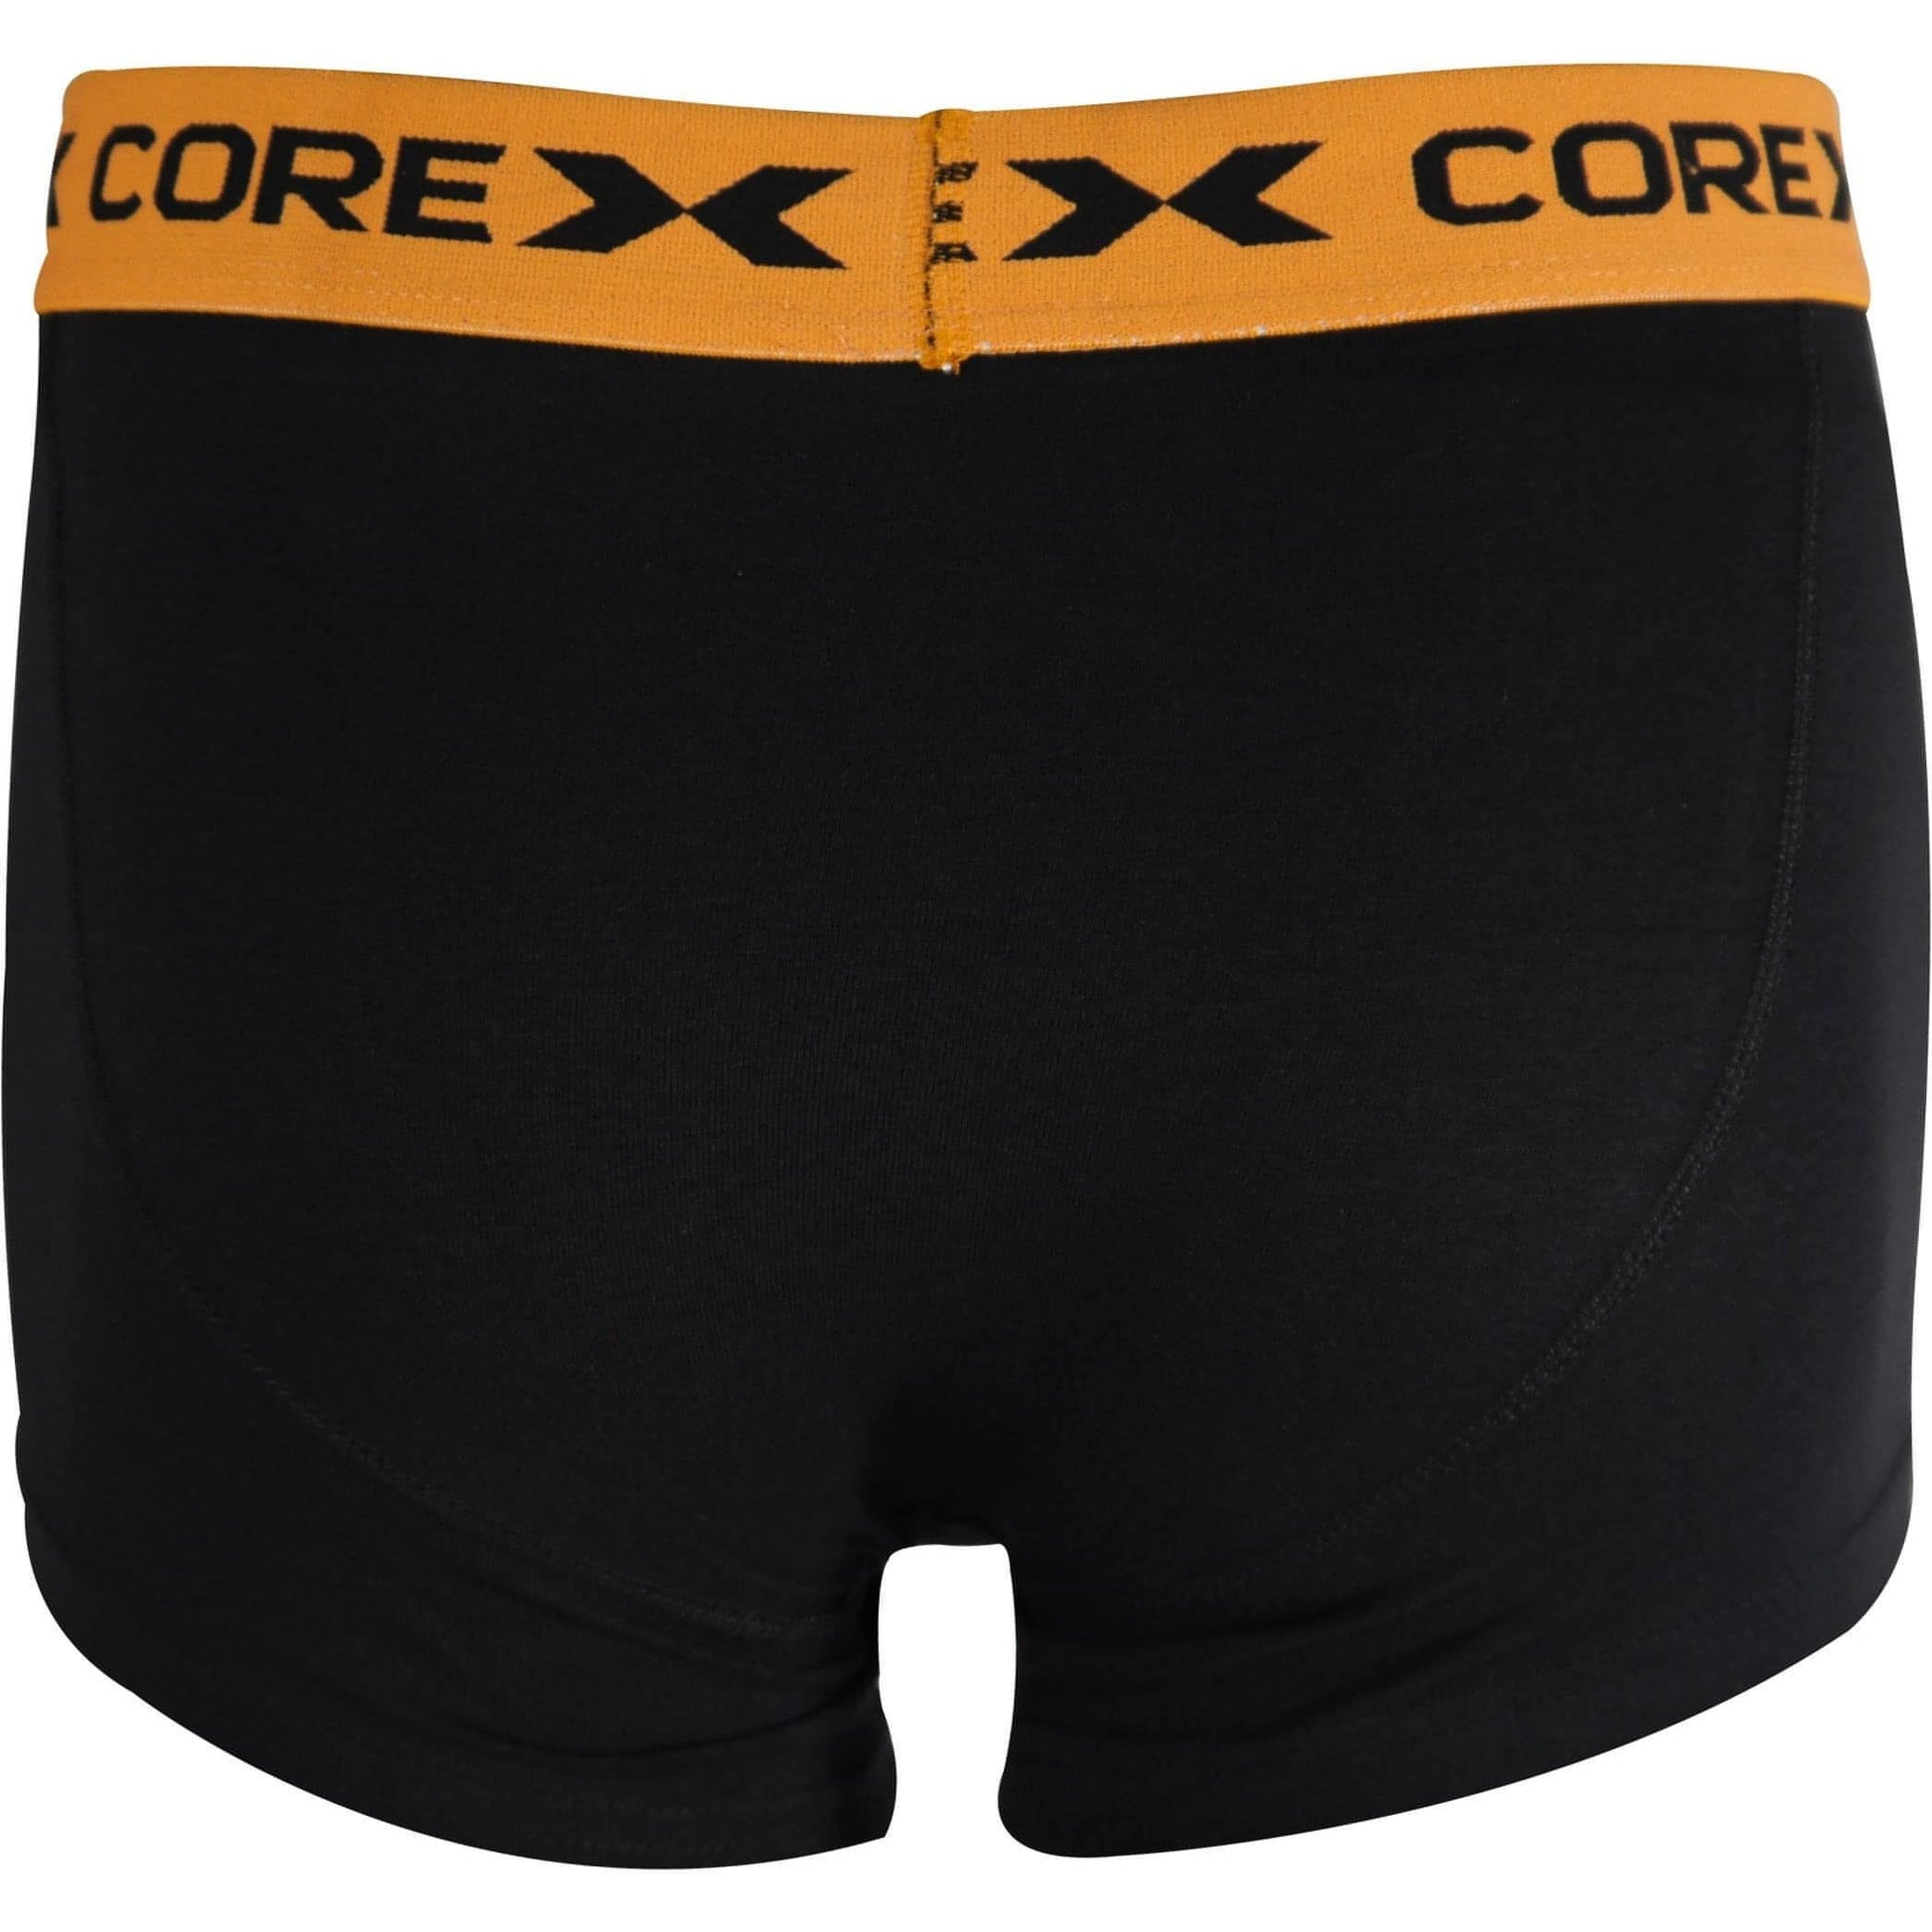 Corex Fitness Classic Pack Boxers 1P204921Wm Blueorange Orange Back View